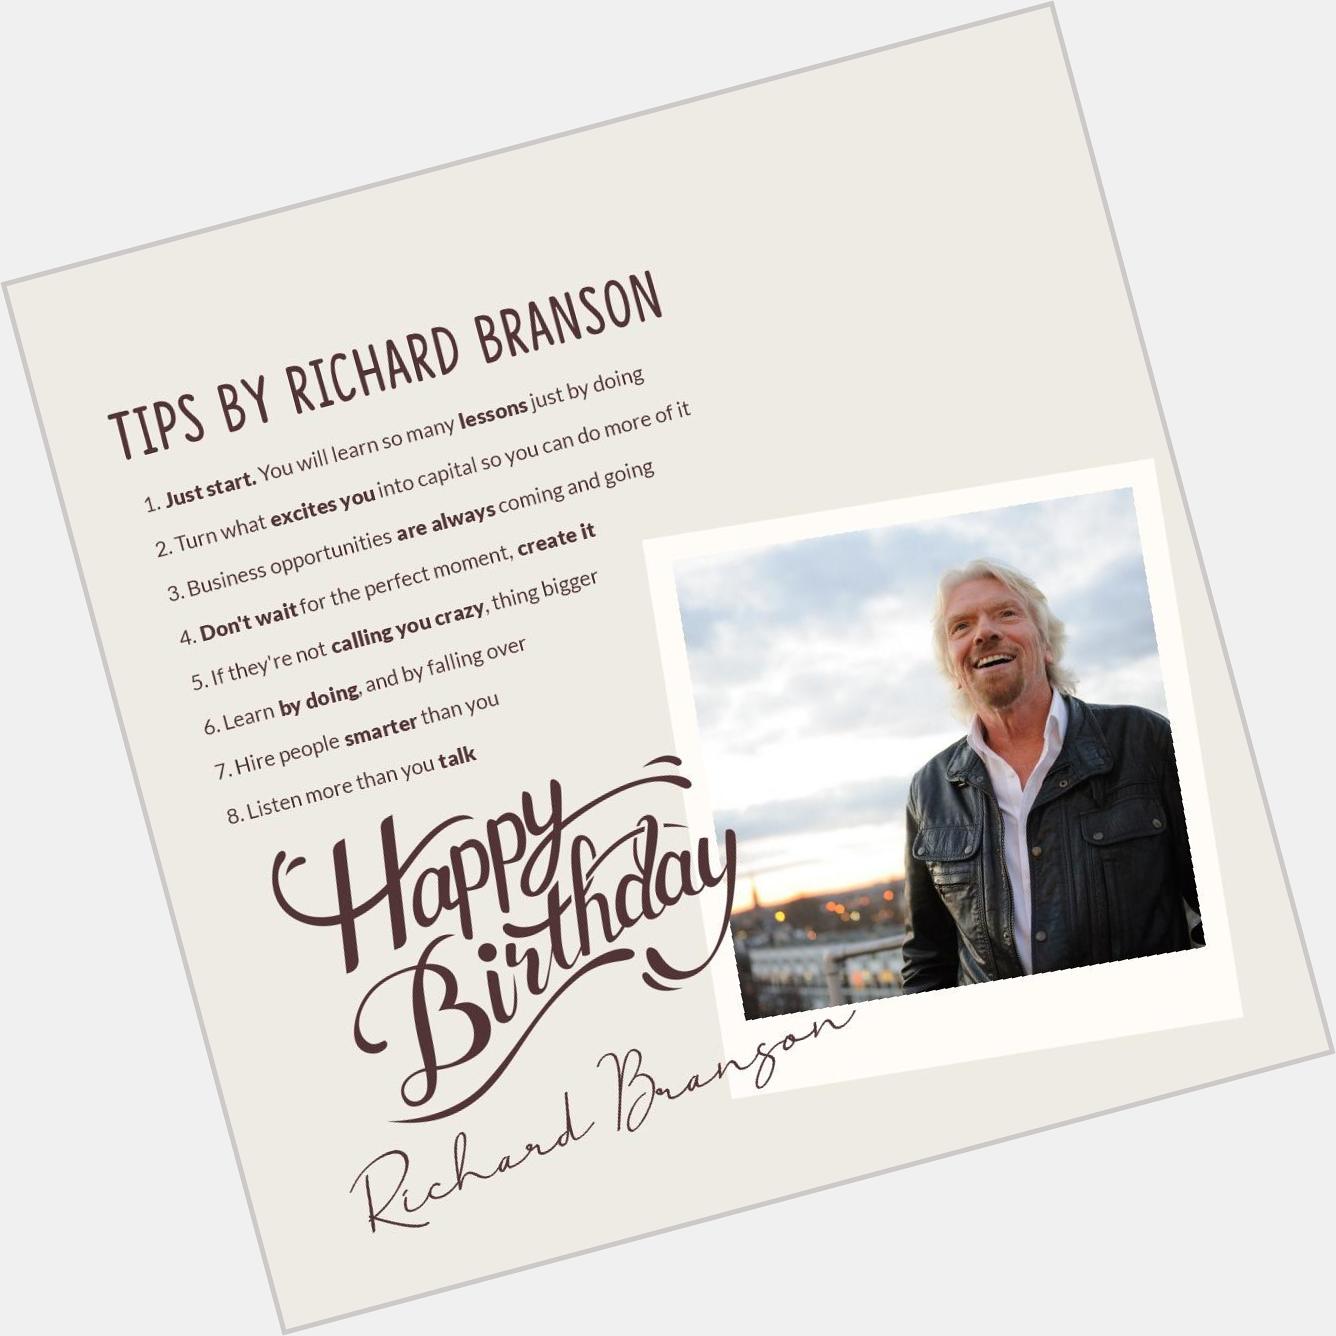 Happy Birthday Richard Branson !
.
.
.   